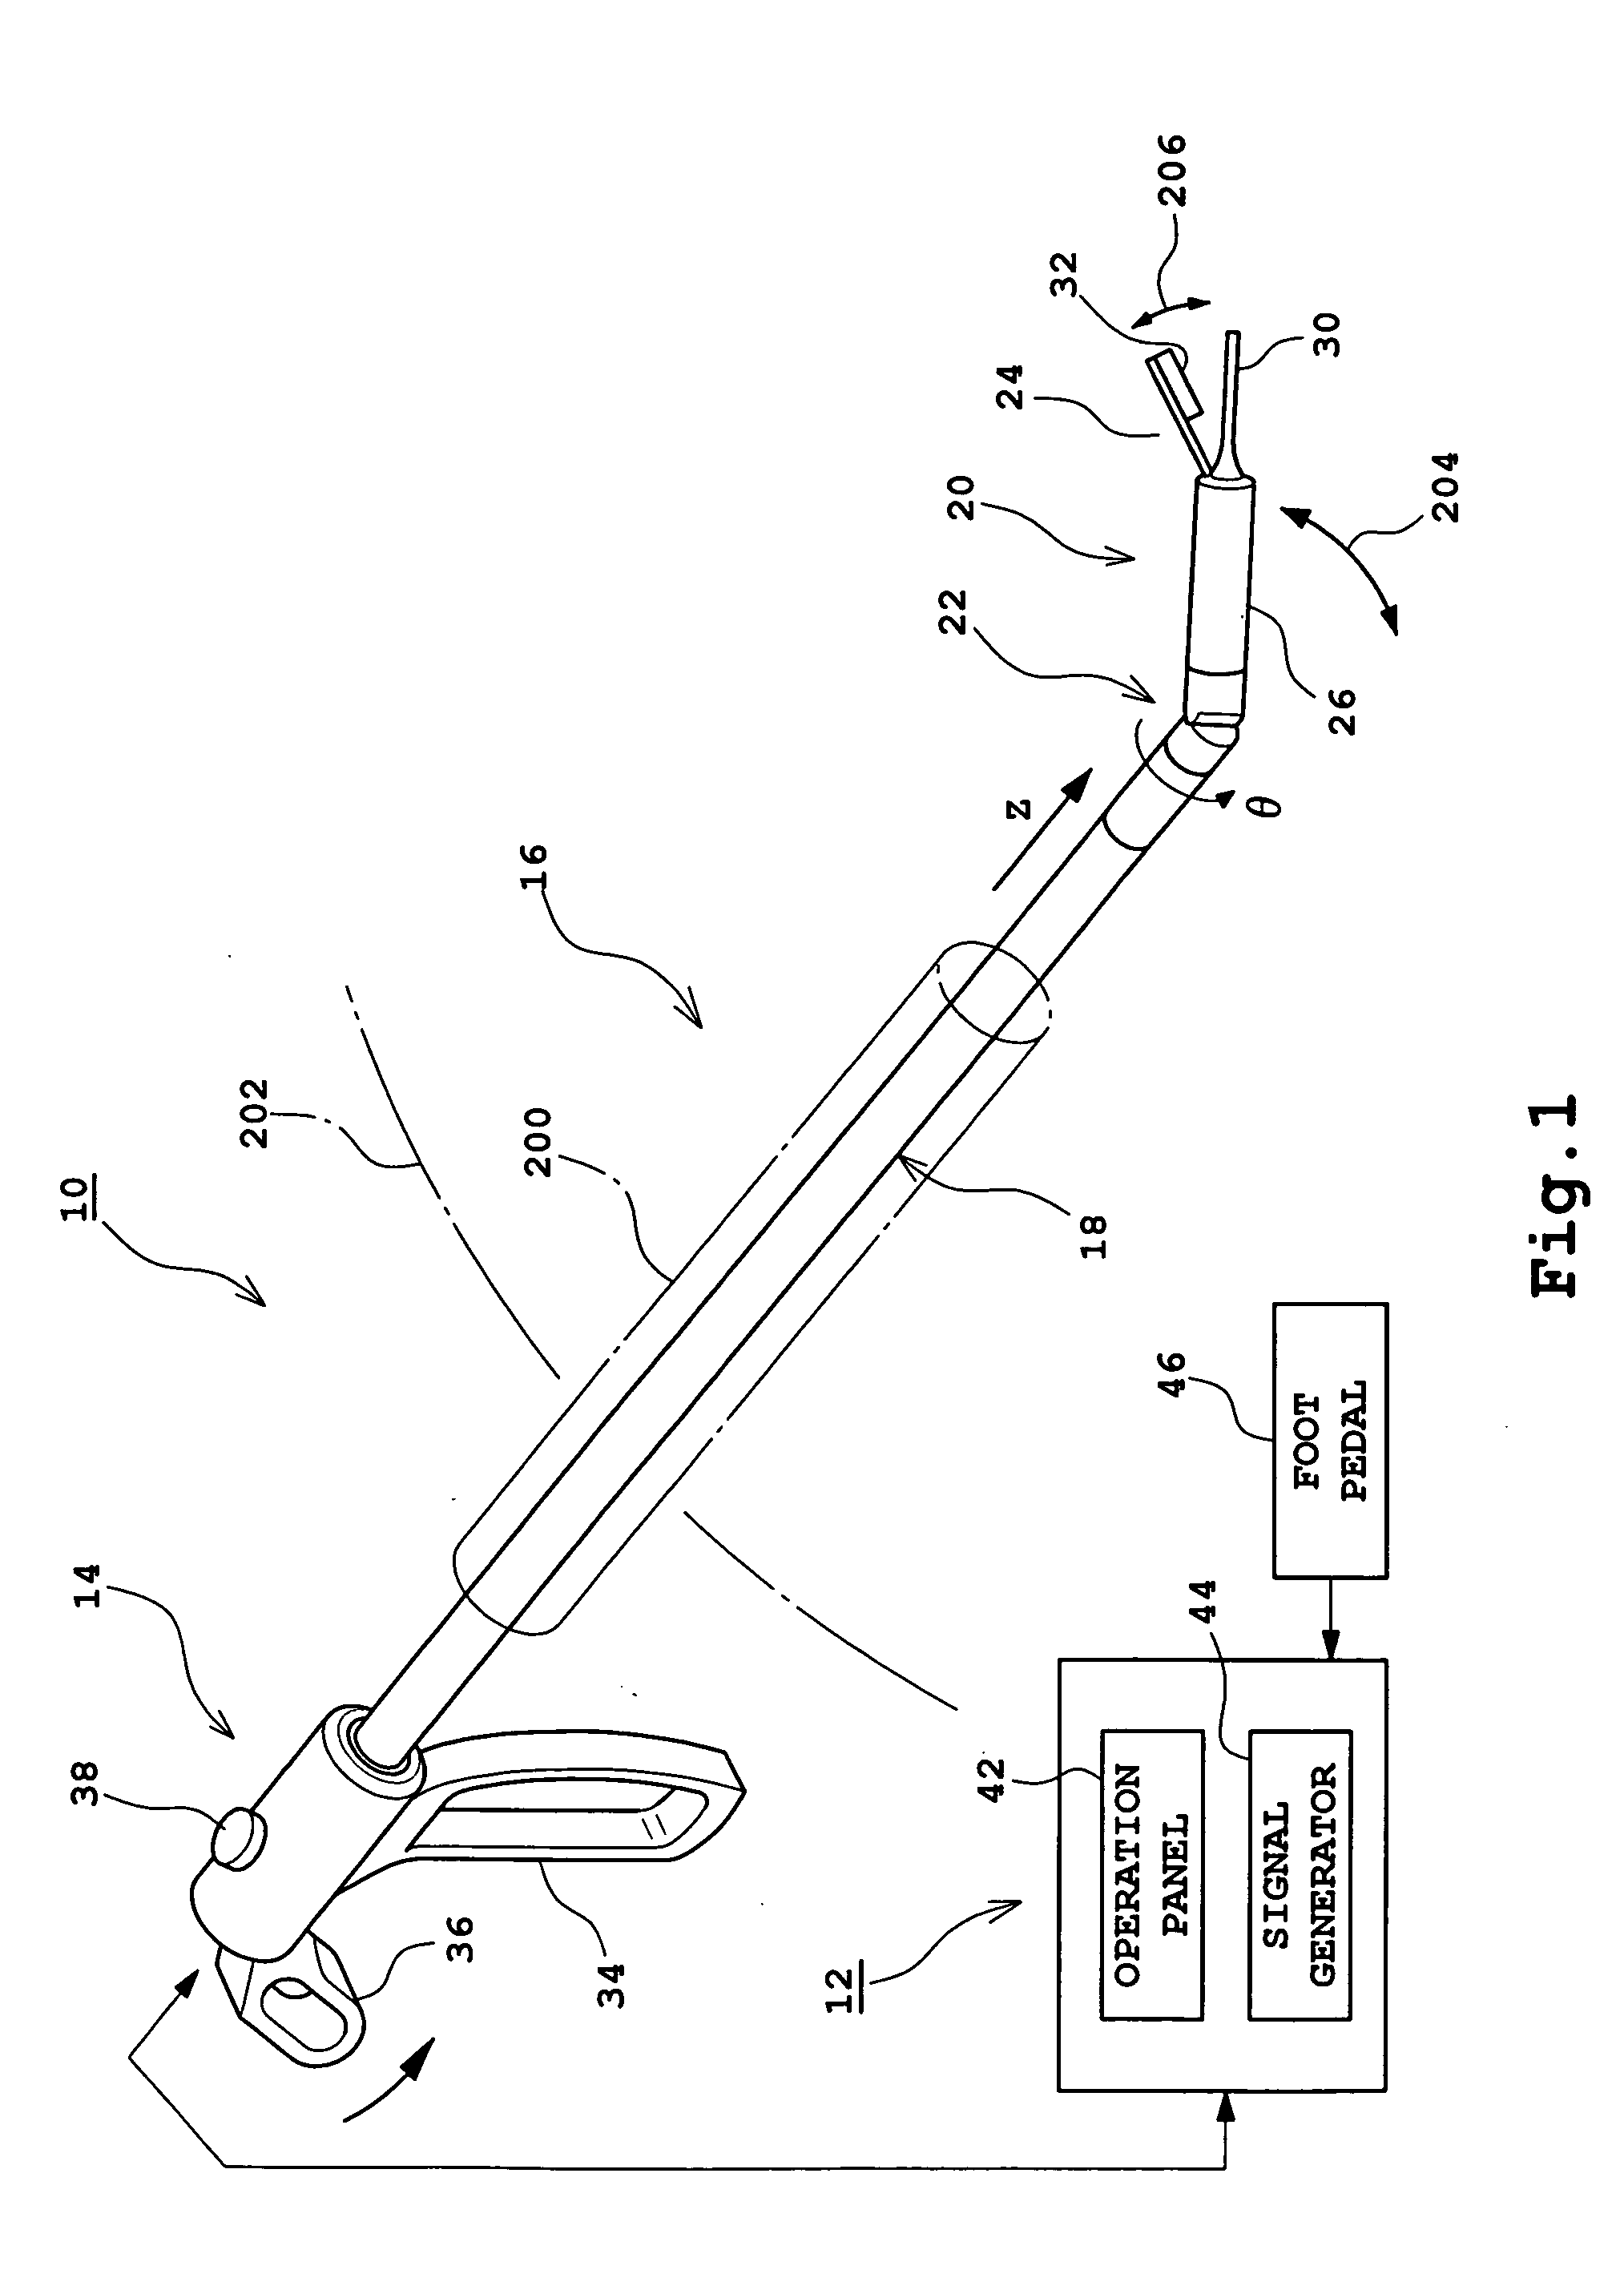 Ultrasonic surgical apparatus